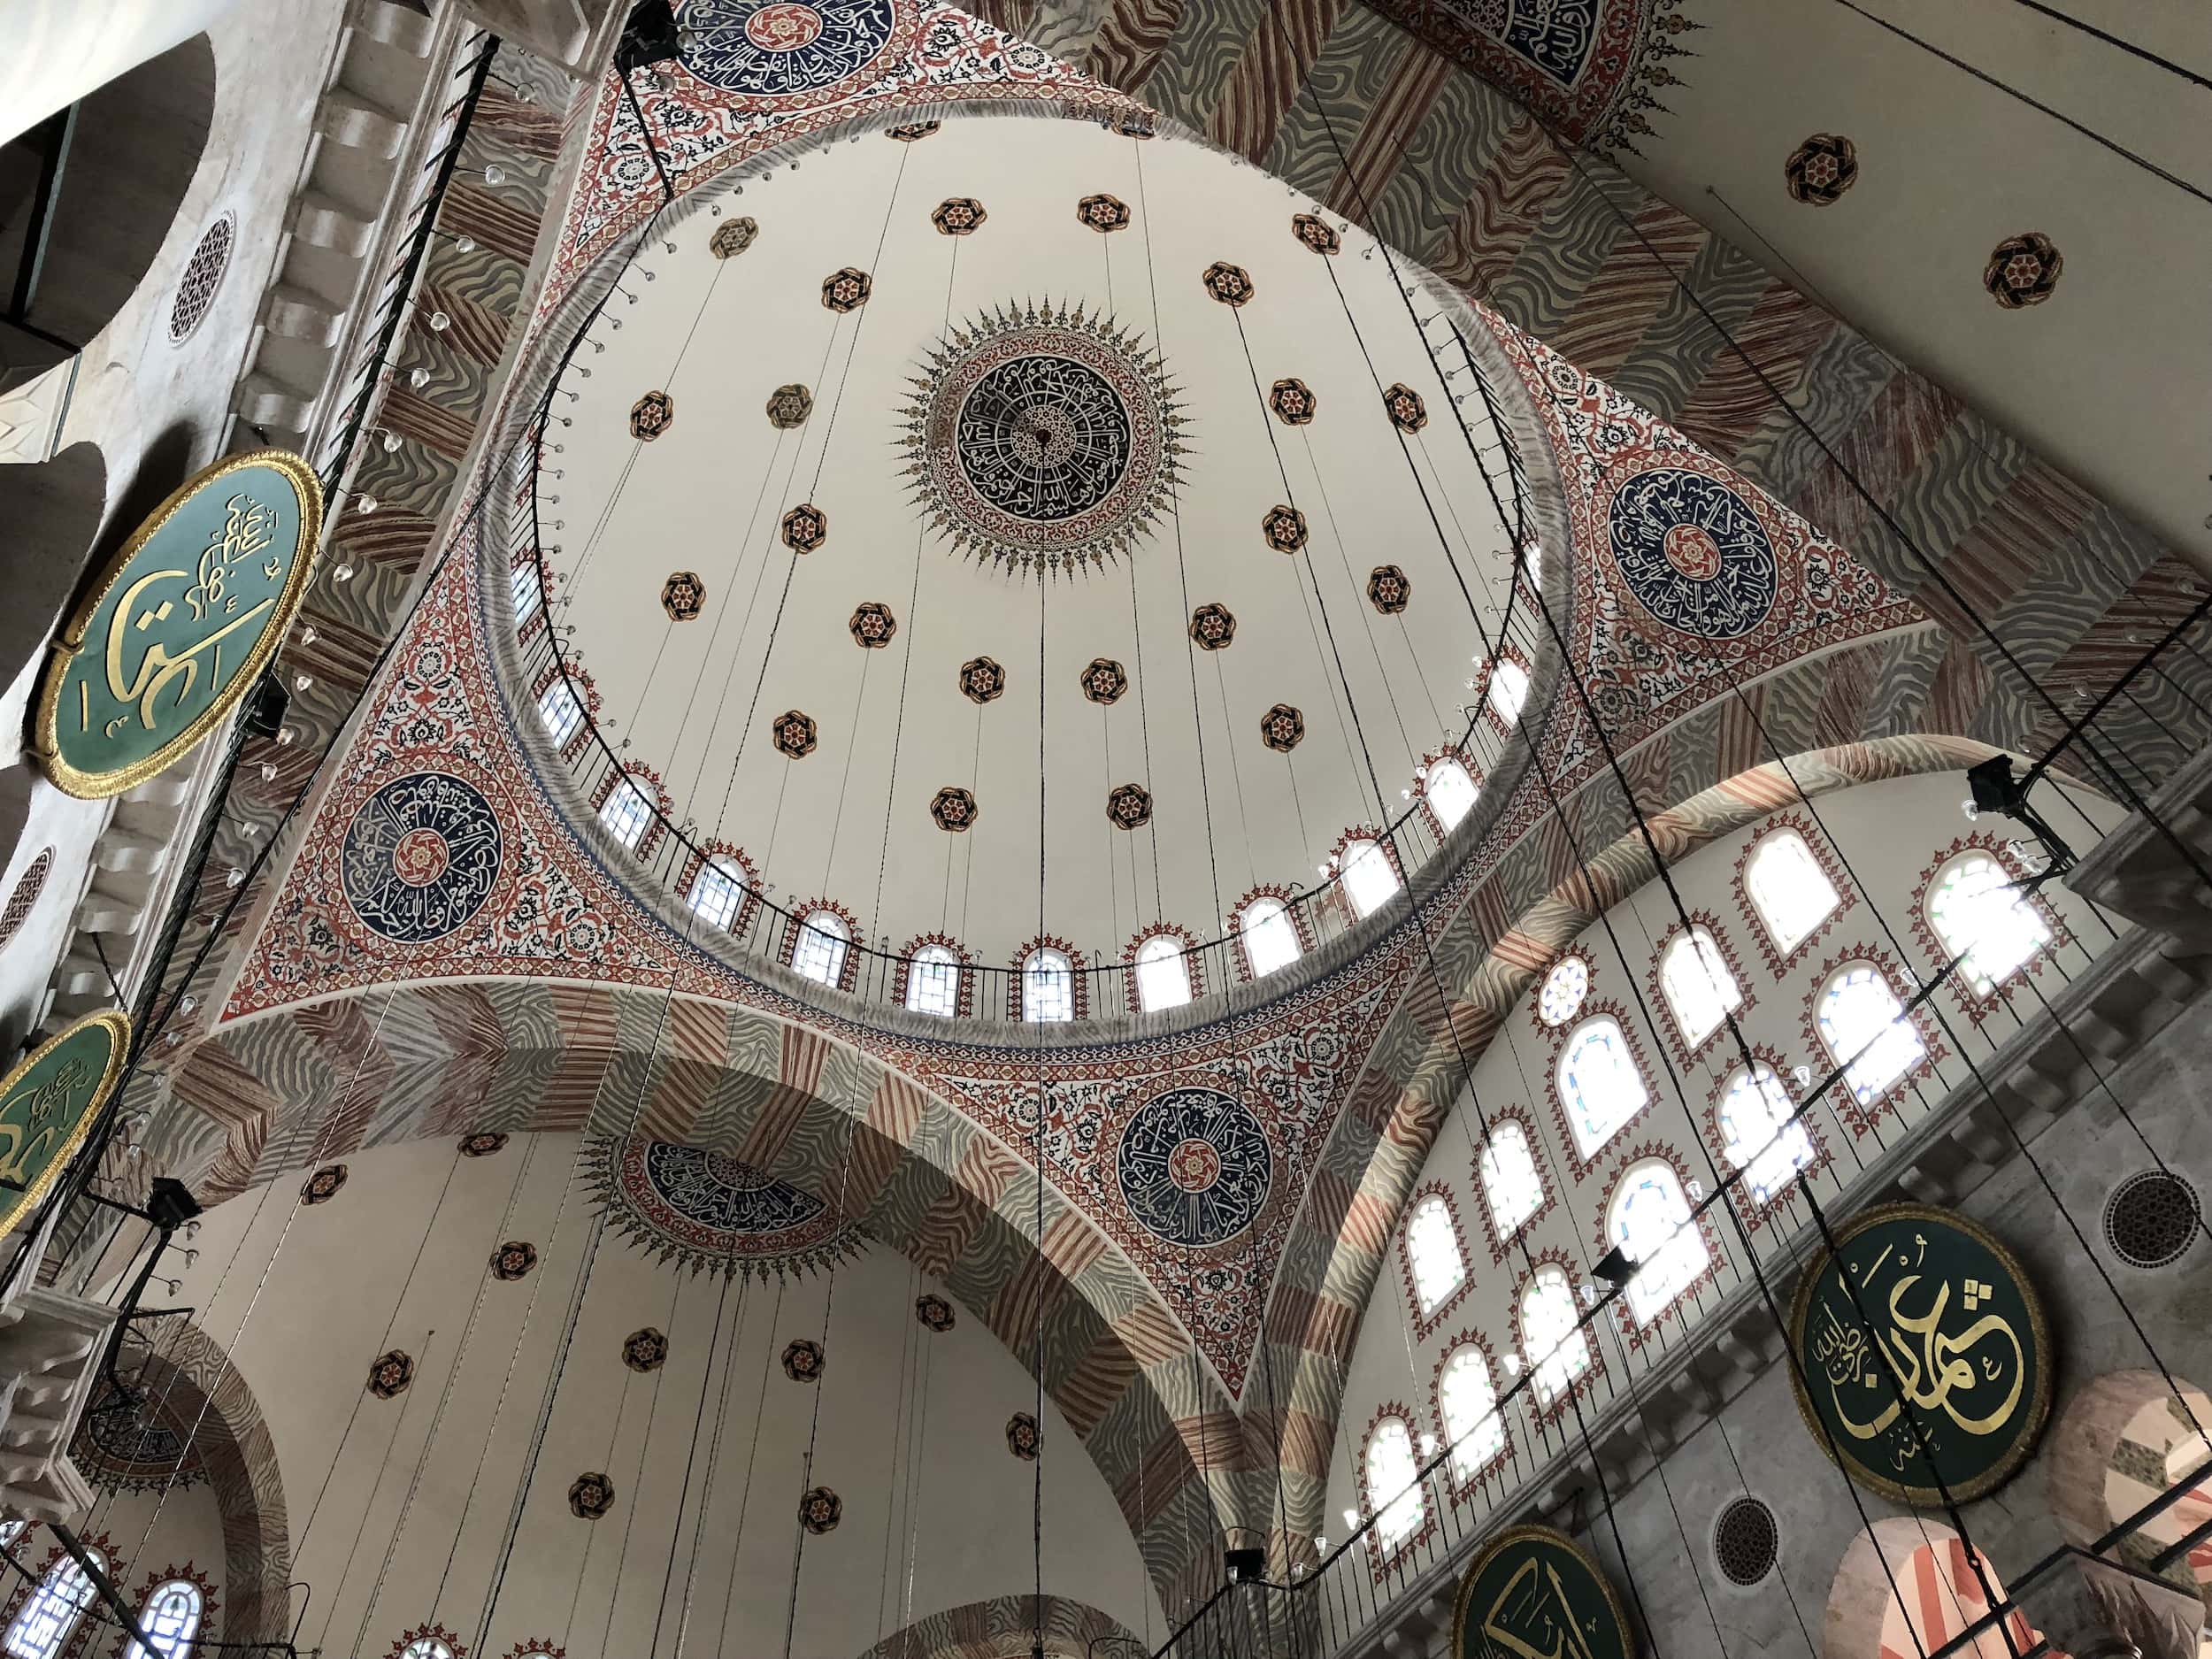 Dome of the Kılıç Ali Pasha Mosque in Tophane, Istanbul, Turkey